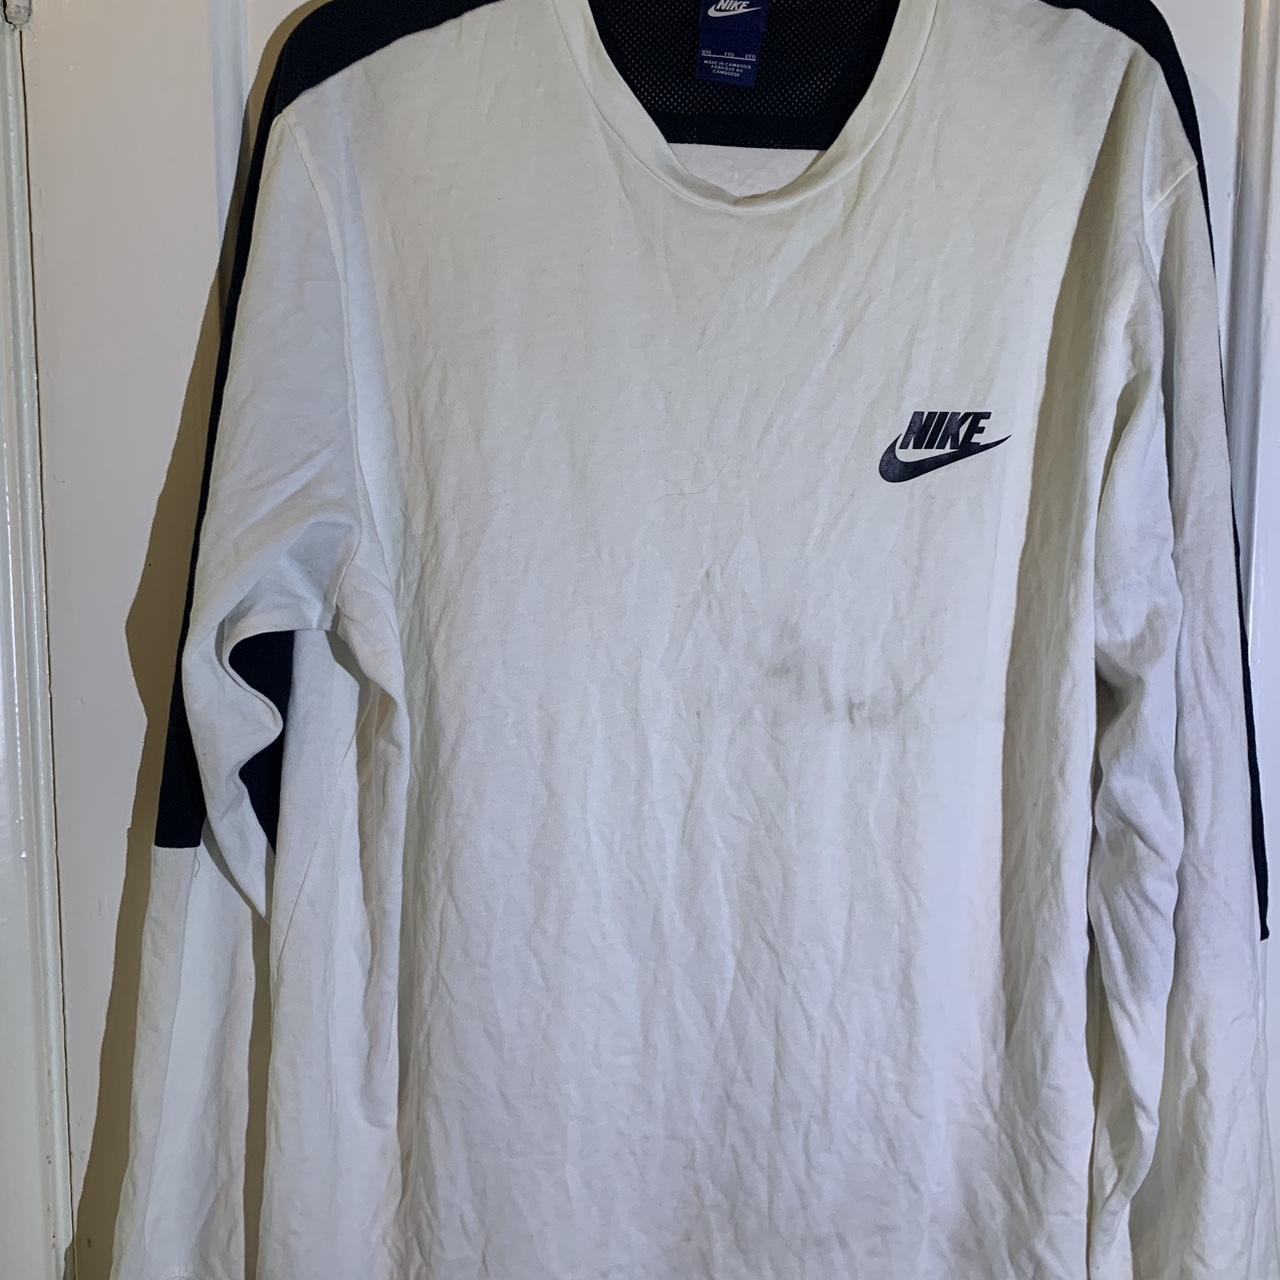 Nike long sleeved shirt - Depop